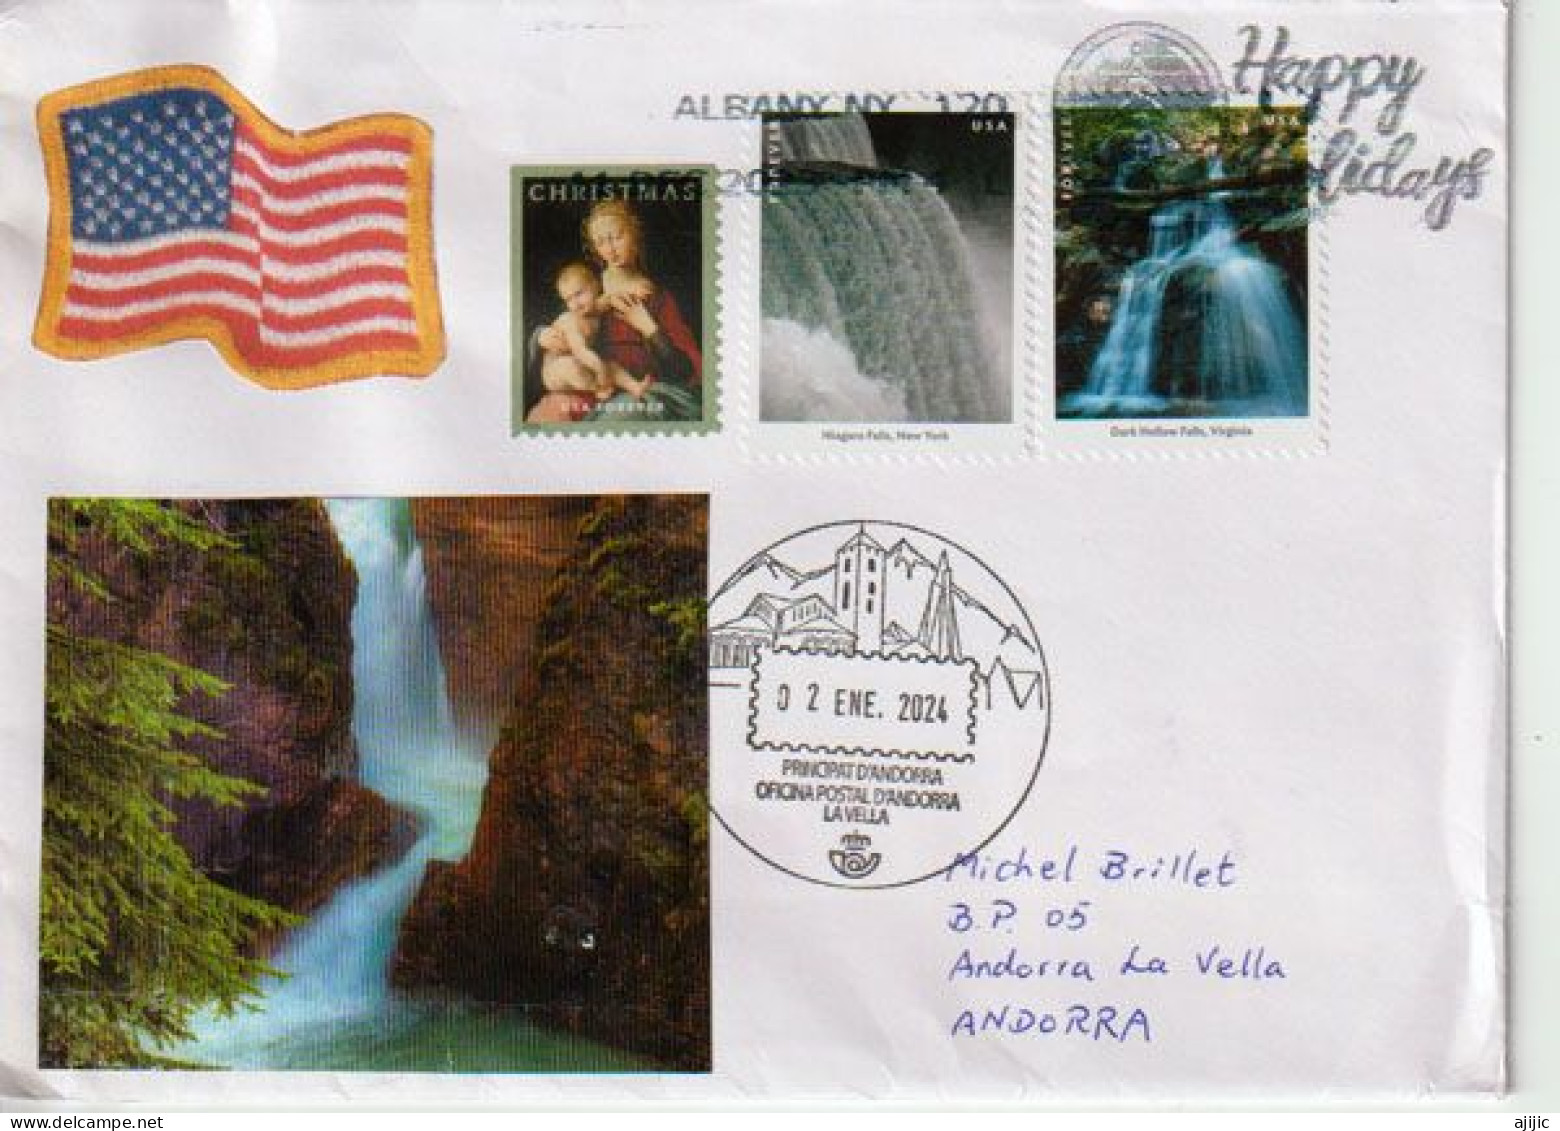 2023. Dark Hollow Falls (Shenandoah National Park) ,Virginia, Letter USA To Andorra (Principality) With Arrival Postmark - Briefe U. Dokumente